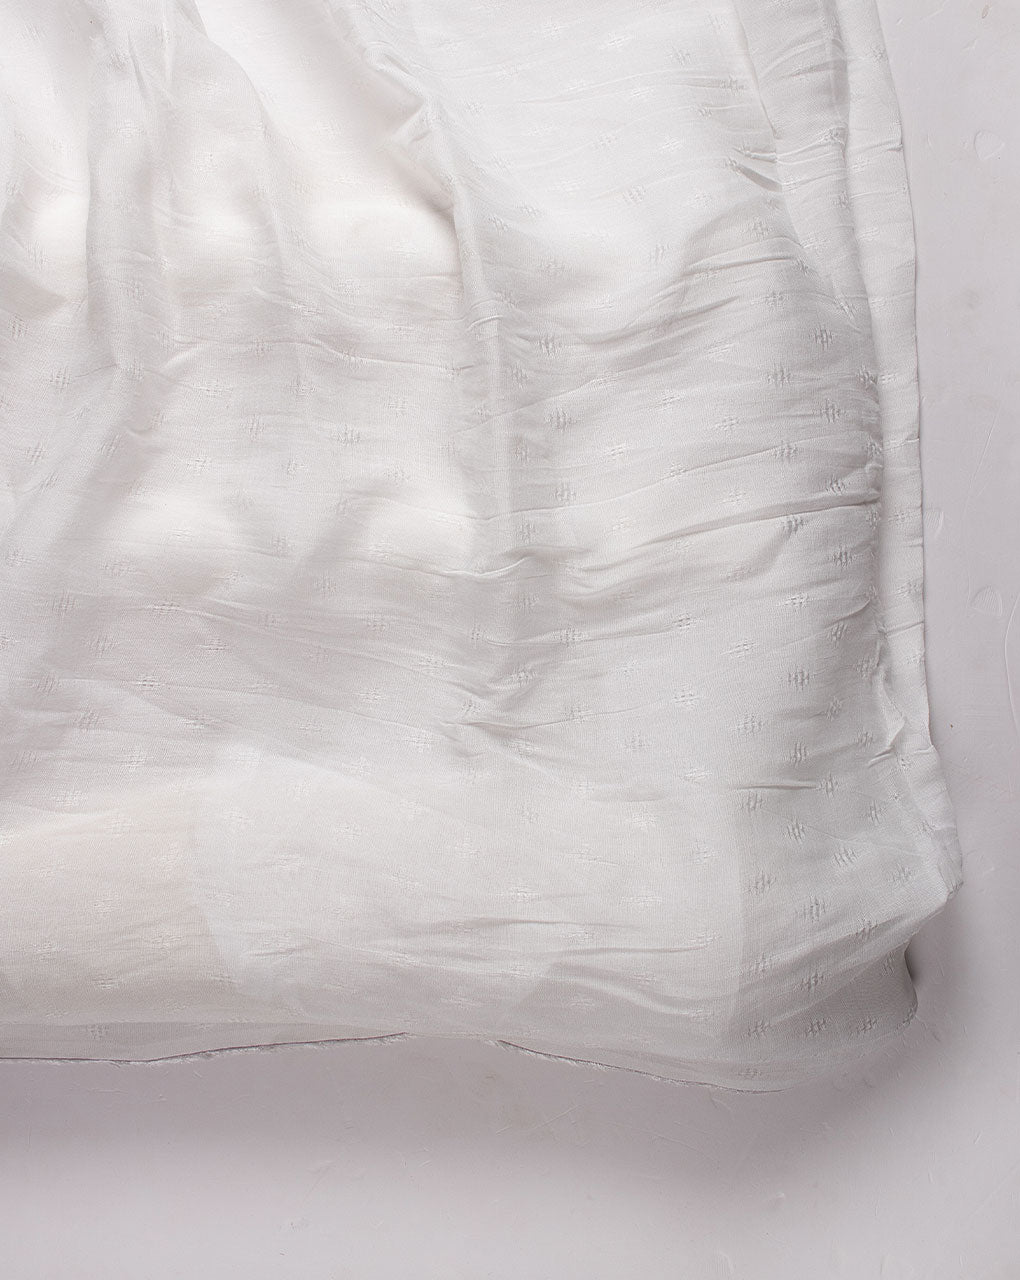 Greige Shirting Cotton Lycra Fabric (Bombay Lycra)